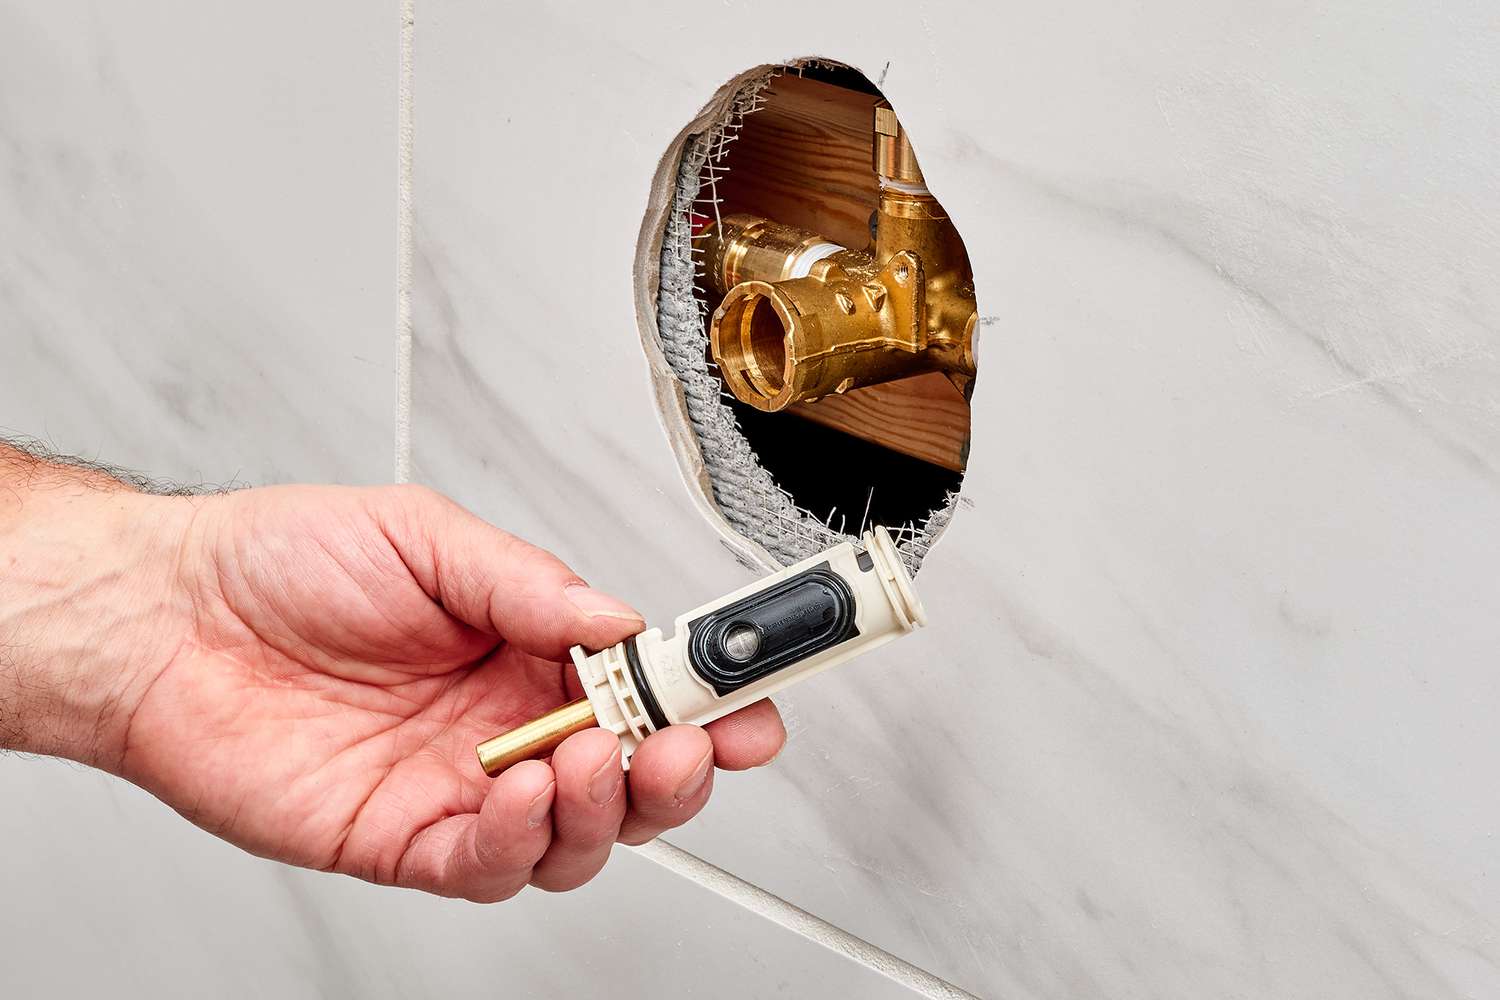 Moen pressure-balanced shower valve held in front of exposed shower valve stem